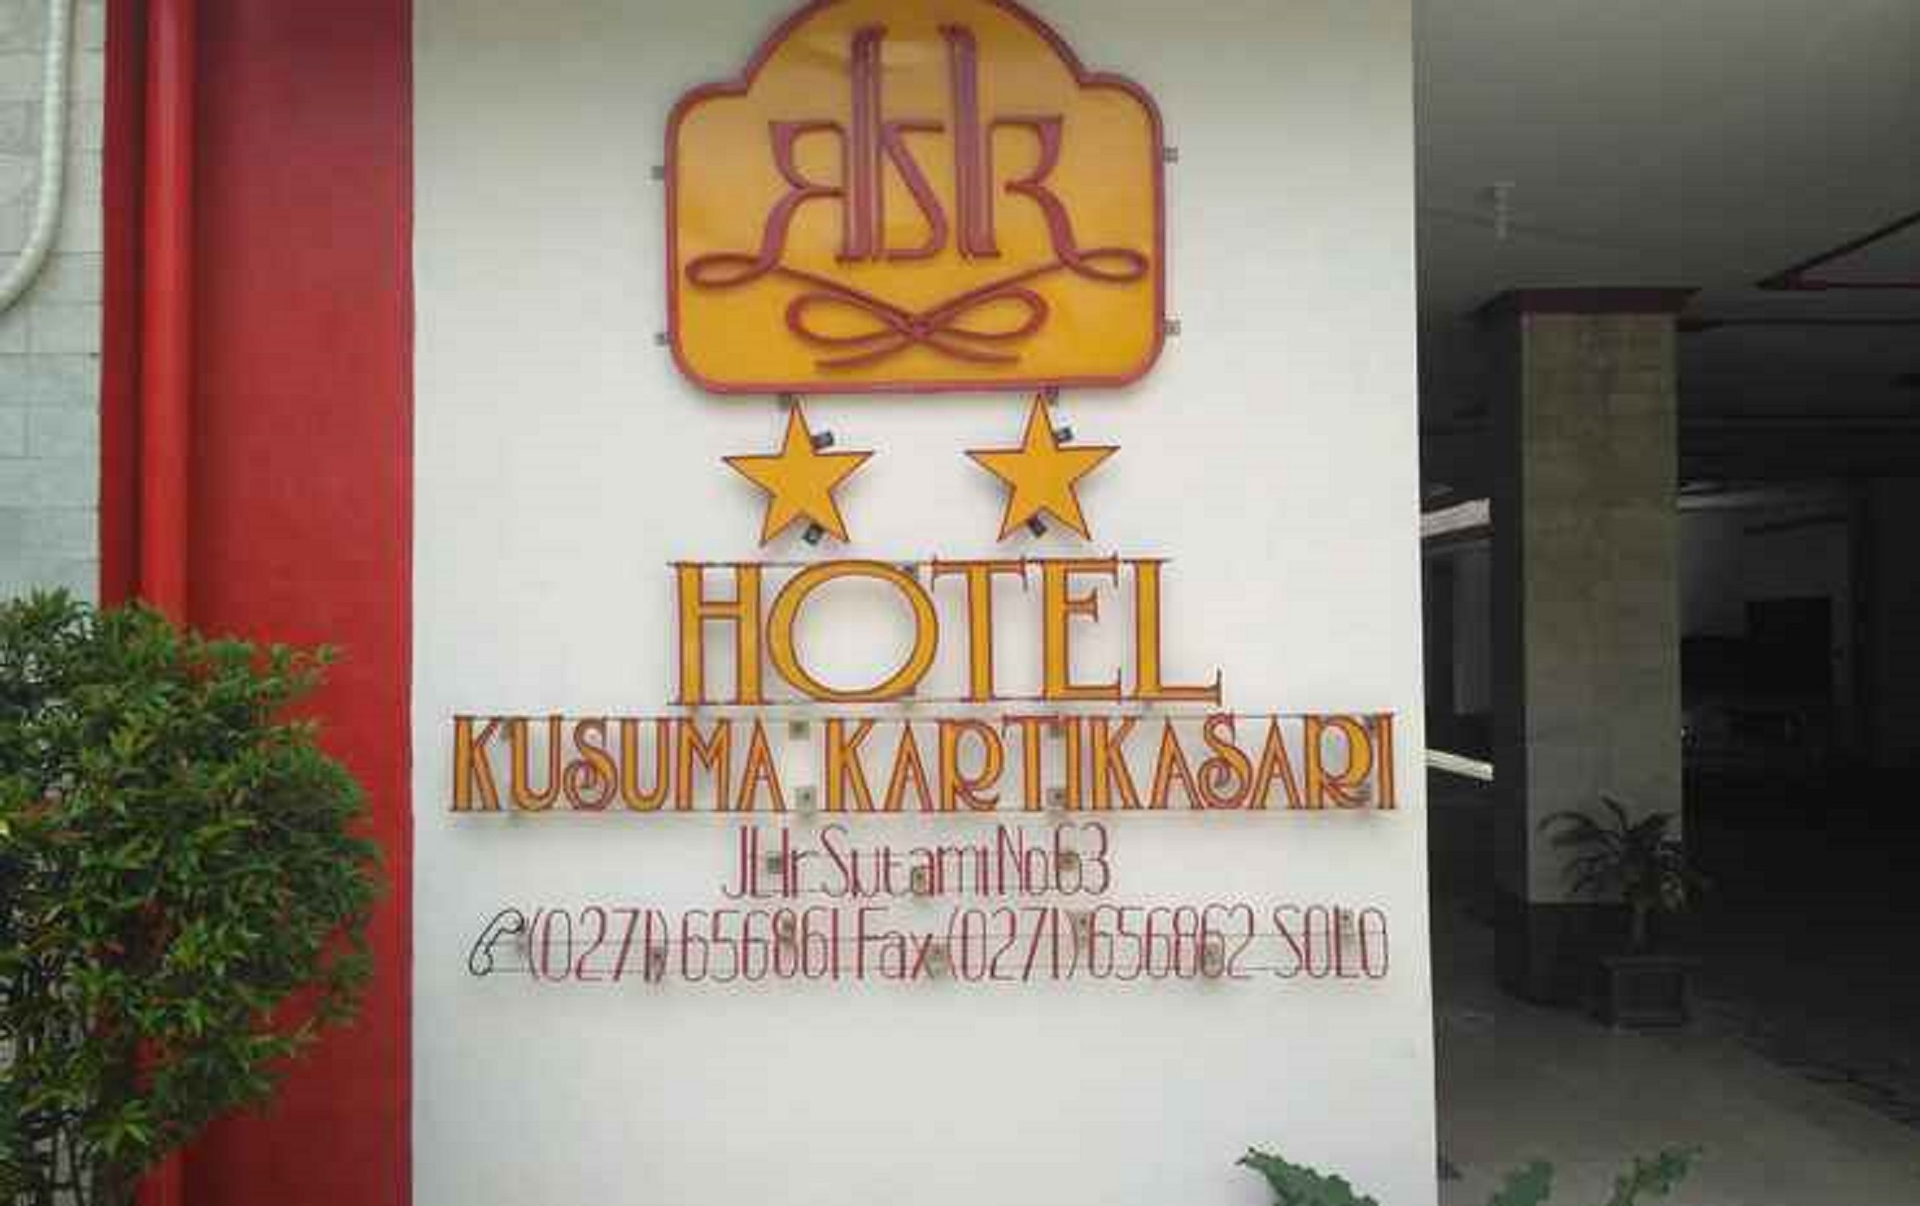 Kusuma Kartikasari Hotel, Solo